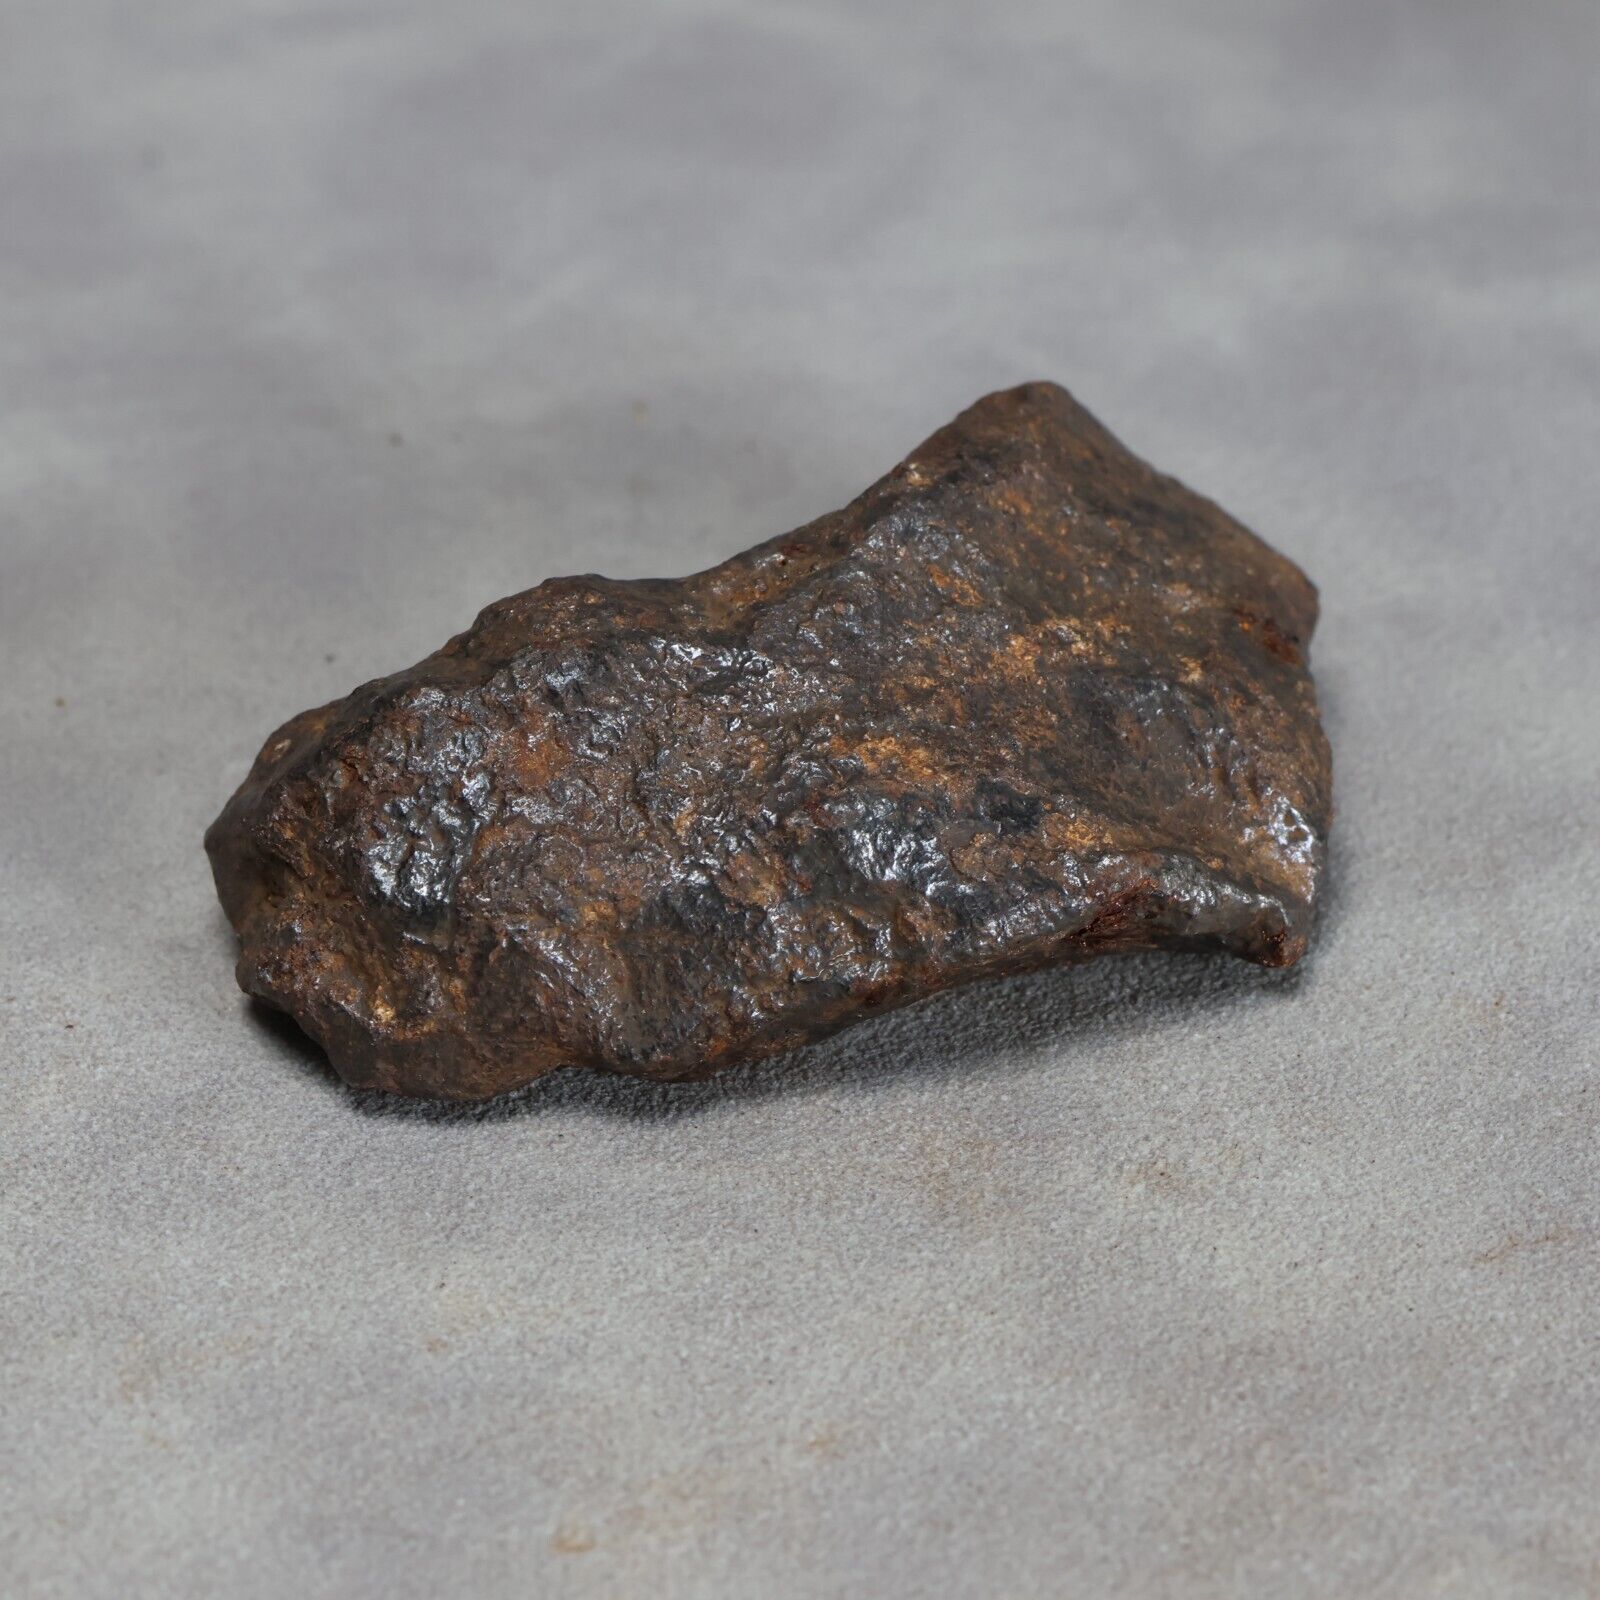 98g Gebel Kamil Meteorite,Egypt,Iron Meteorite,collectio105g Gen,Space Gift L21